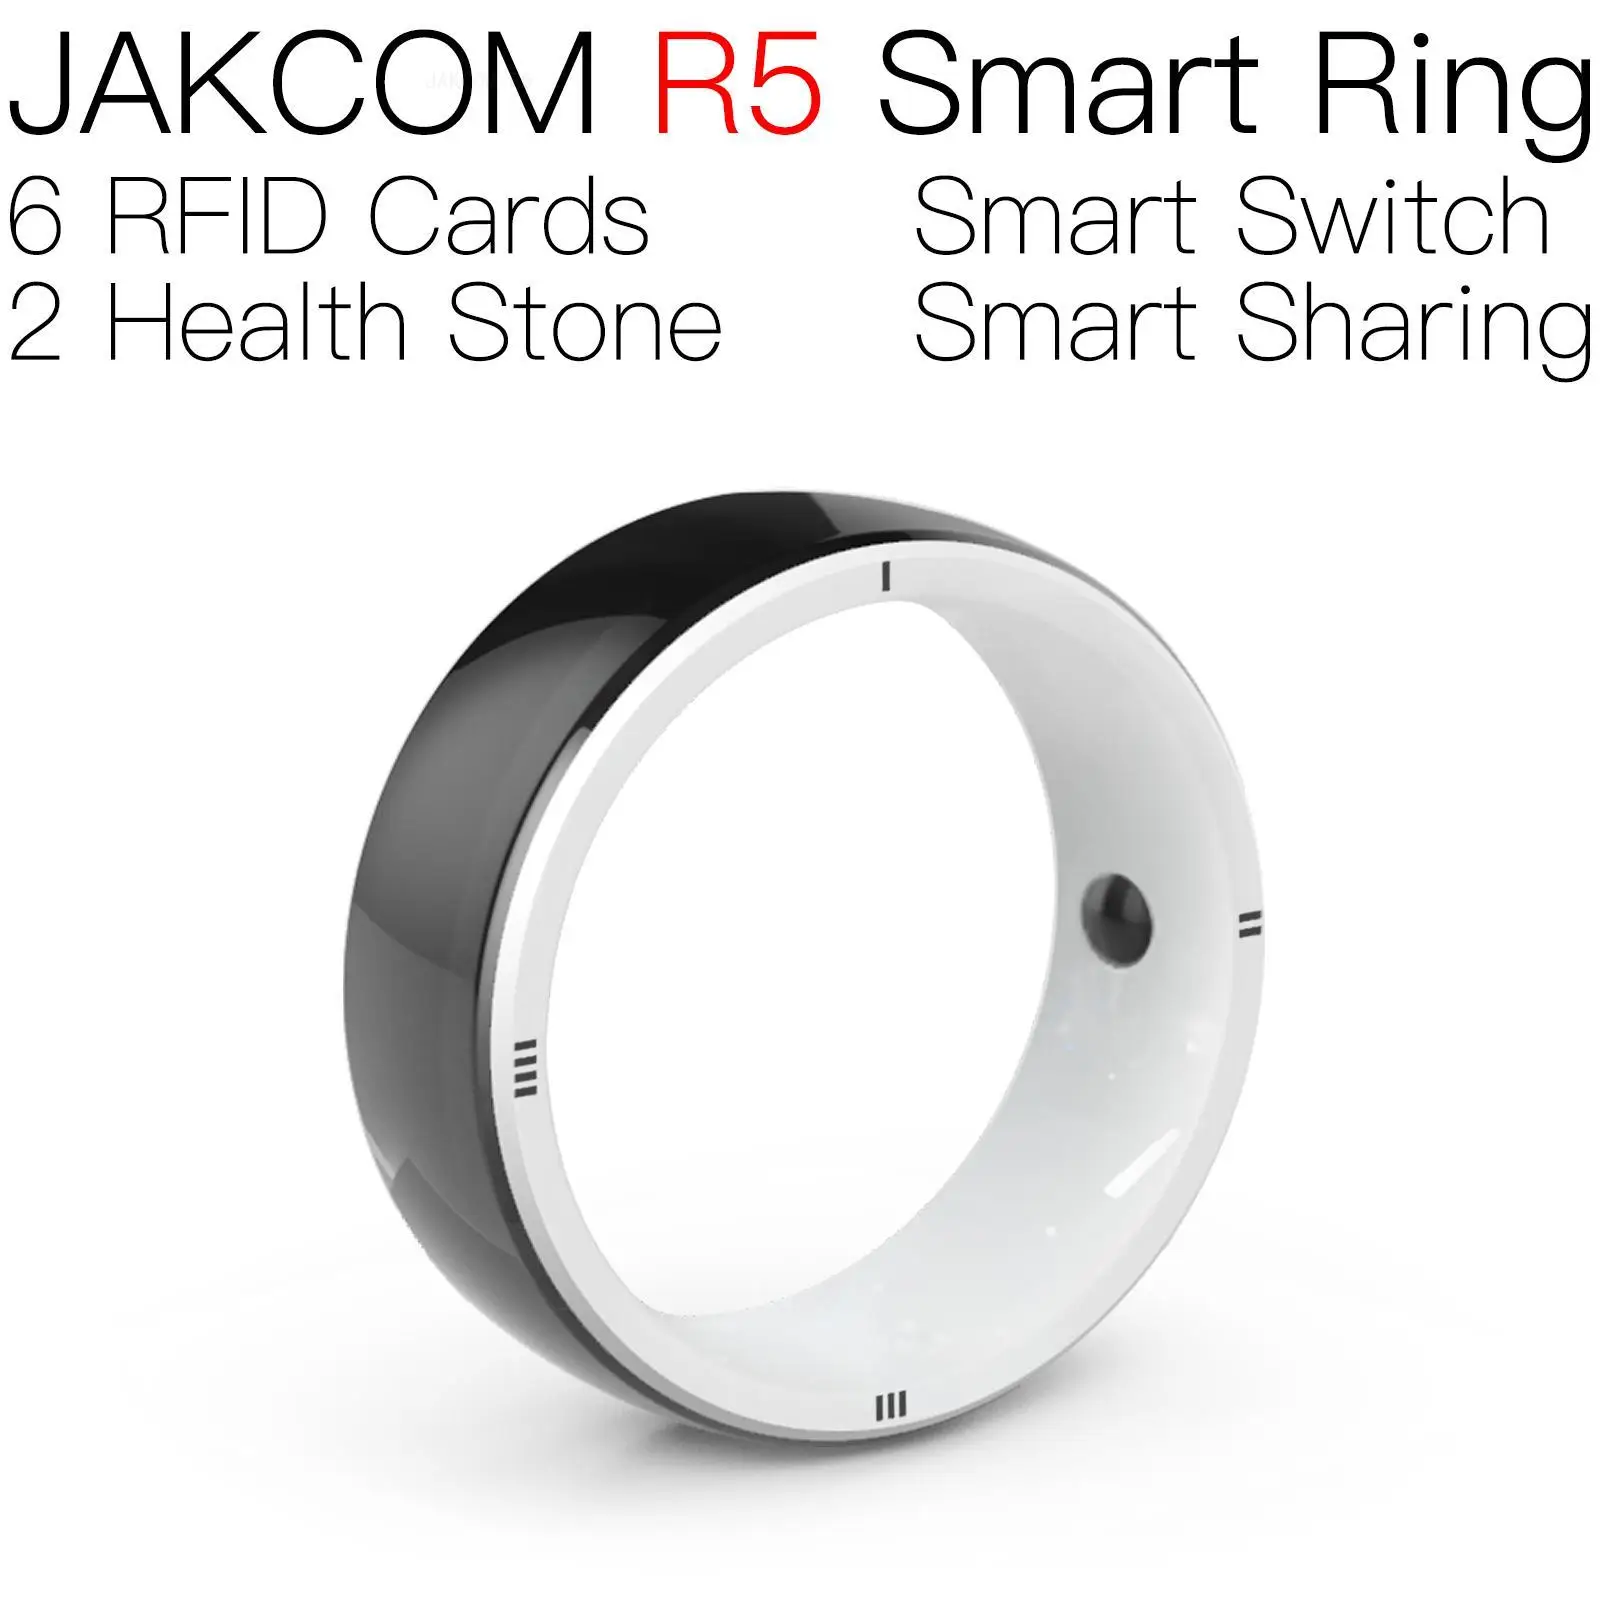 

JAKCOM R5 Smart Ring Nice than oscilator pwm microchip animal rfid tag rewritable card blank chip t5577 tray ts graphic